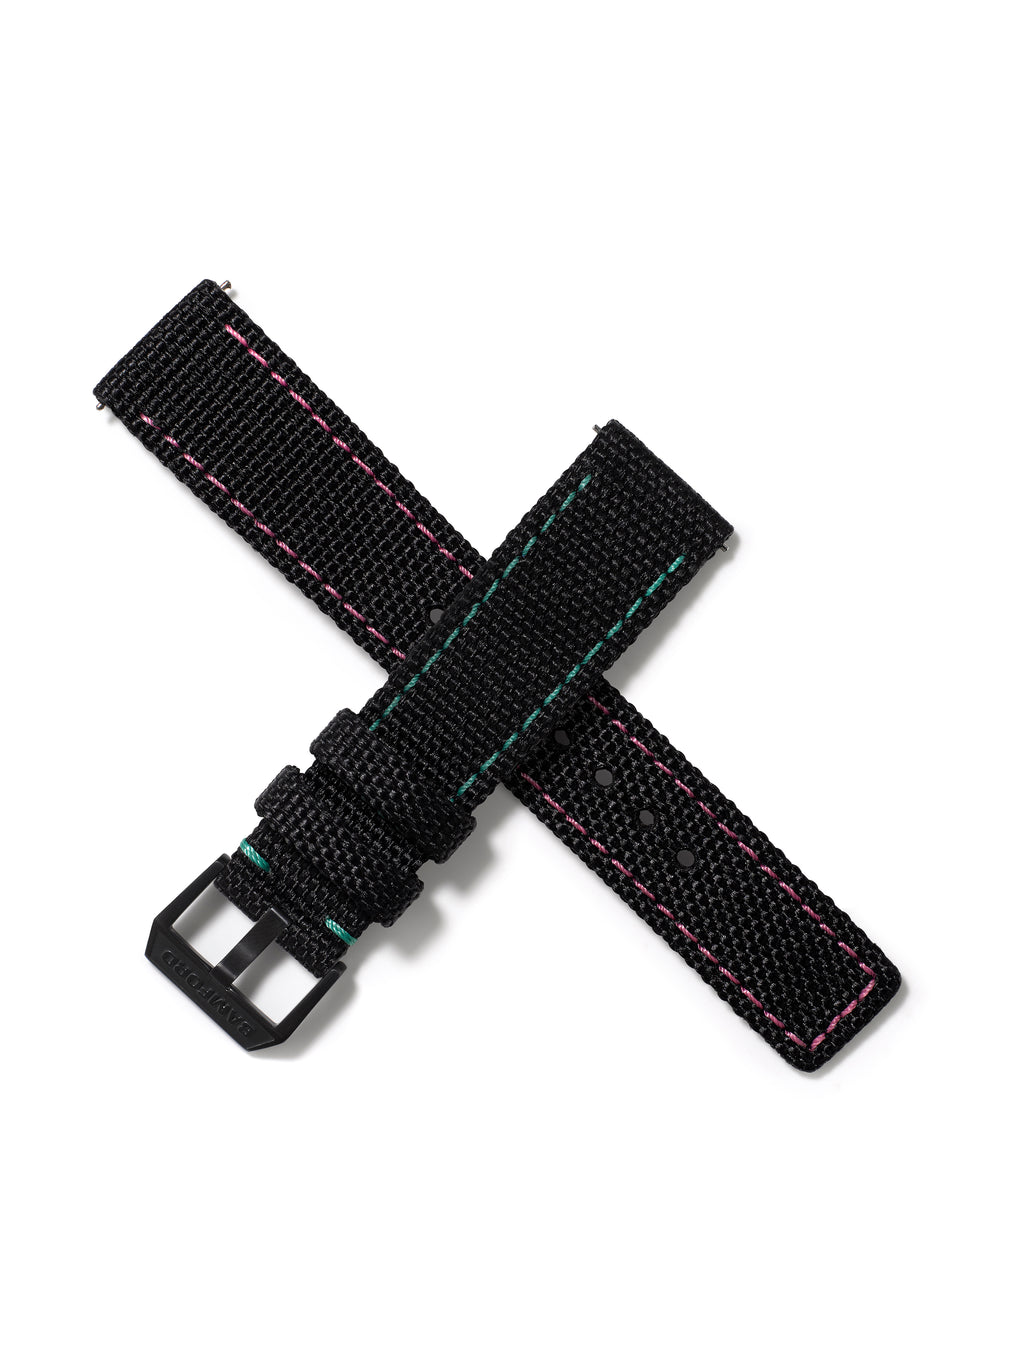 20mm Cordura Strap - Black with Green/Pink Stitch